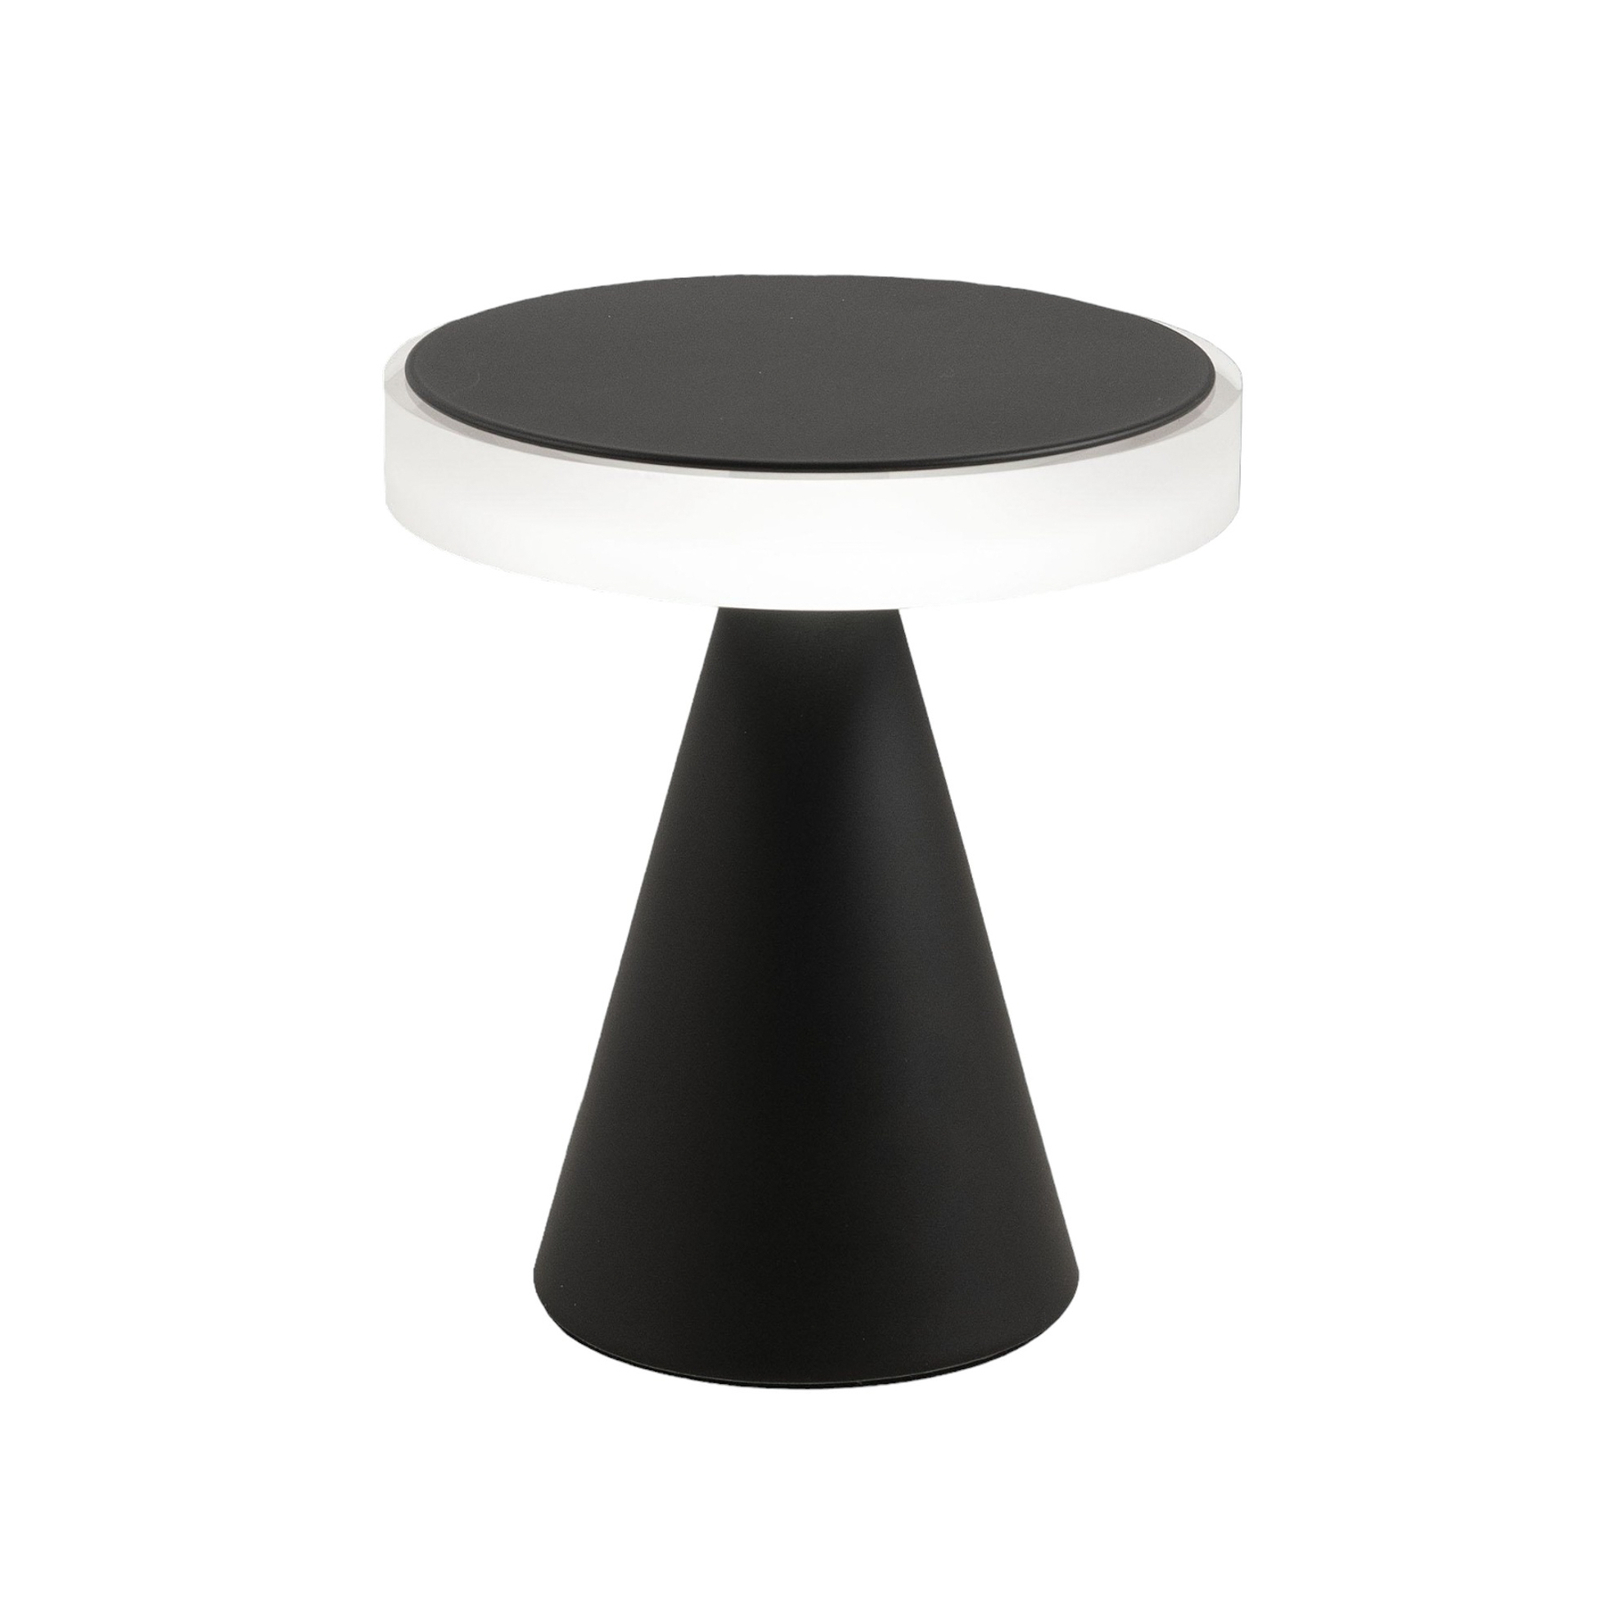 Neutra LED tafellamp, hoogte 27 cm, zwart, touchdimmer